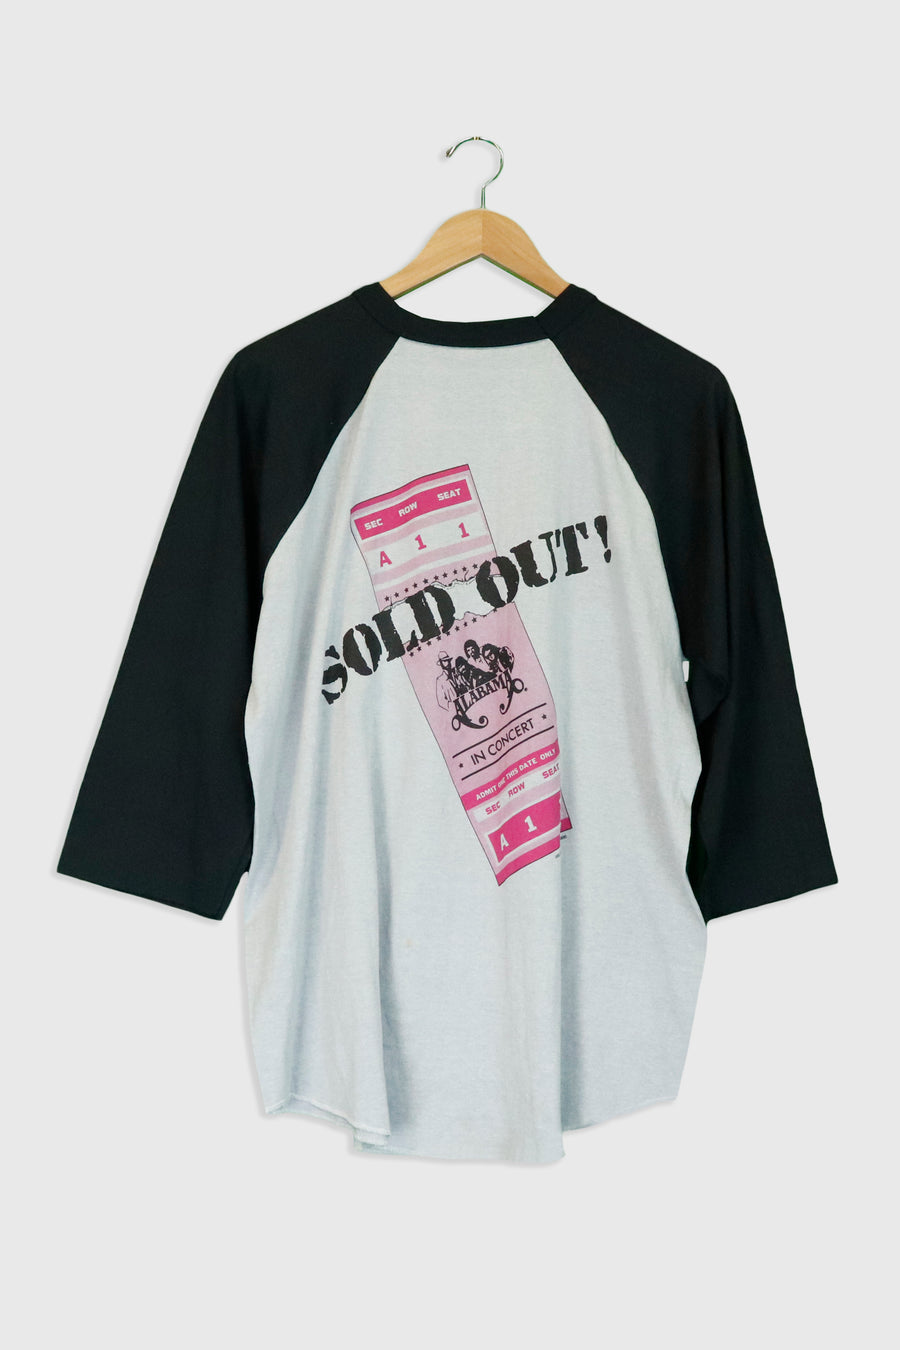 Vintage 1986 The Touch Alabama Concert T Shirt Sz XL